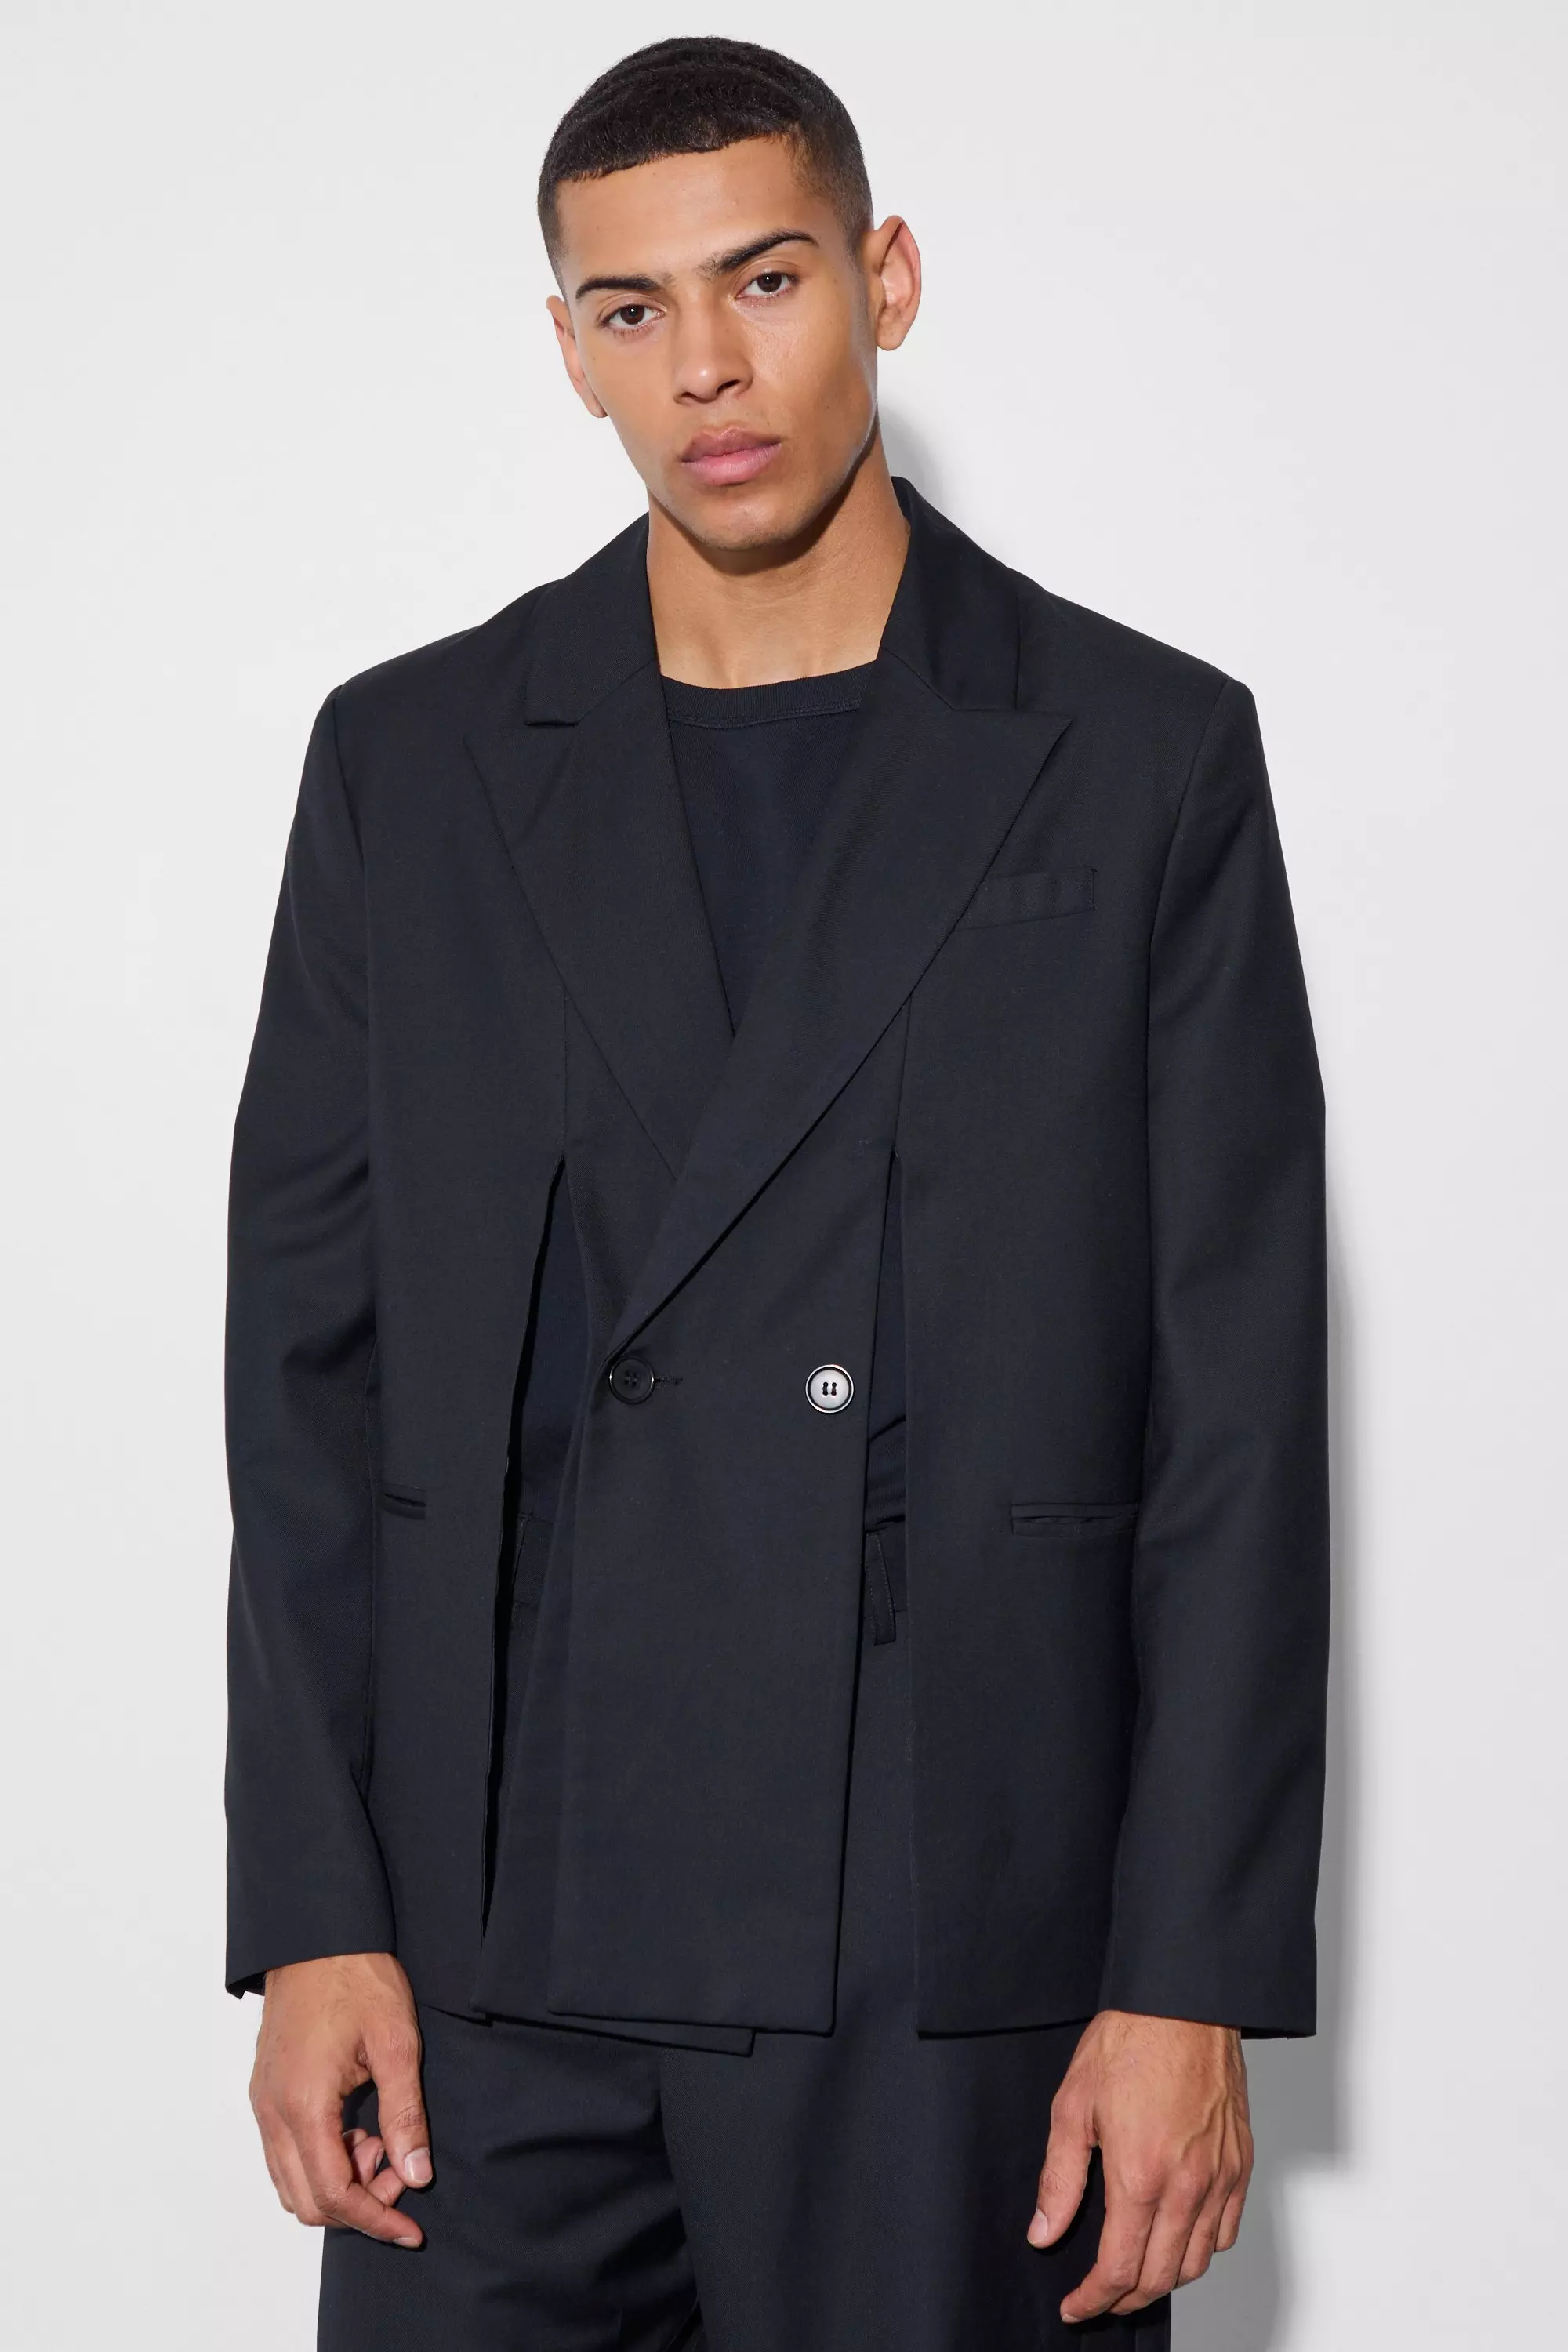 Split Hem Oversized Suit Jacket Black